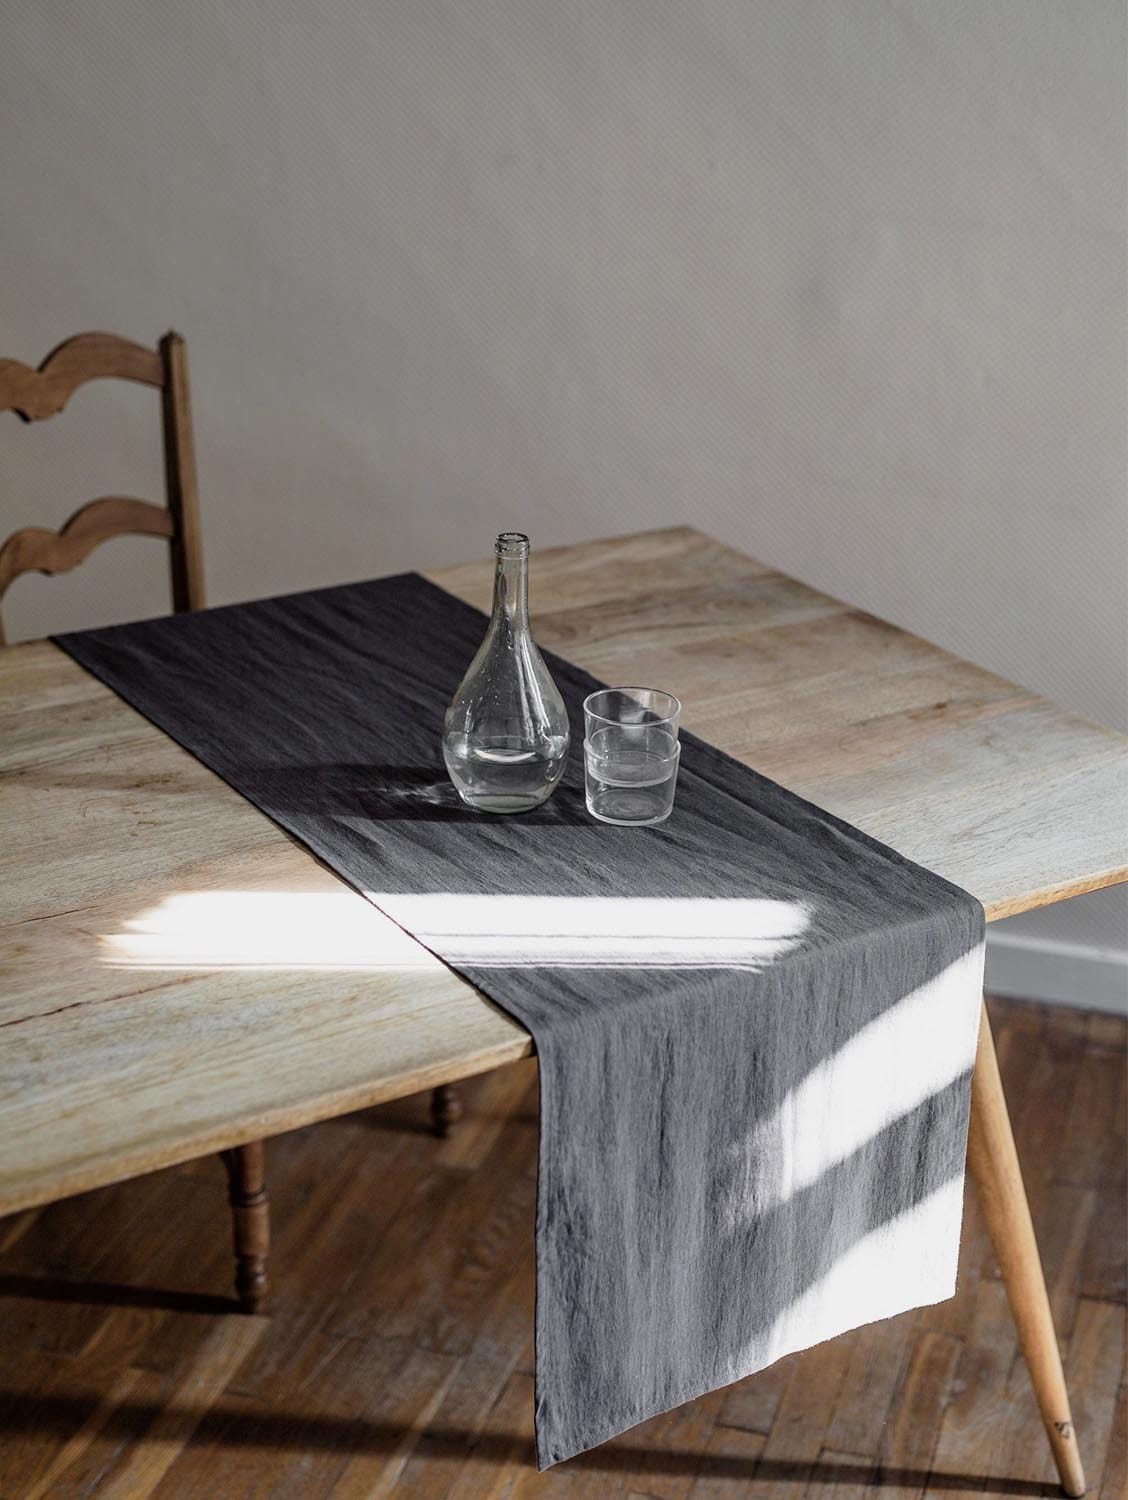 AmourLinen Linen table runner in Charcoal 50x250 cm / 20x98" / Charcoal